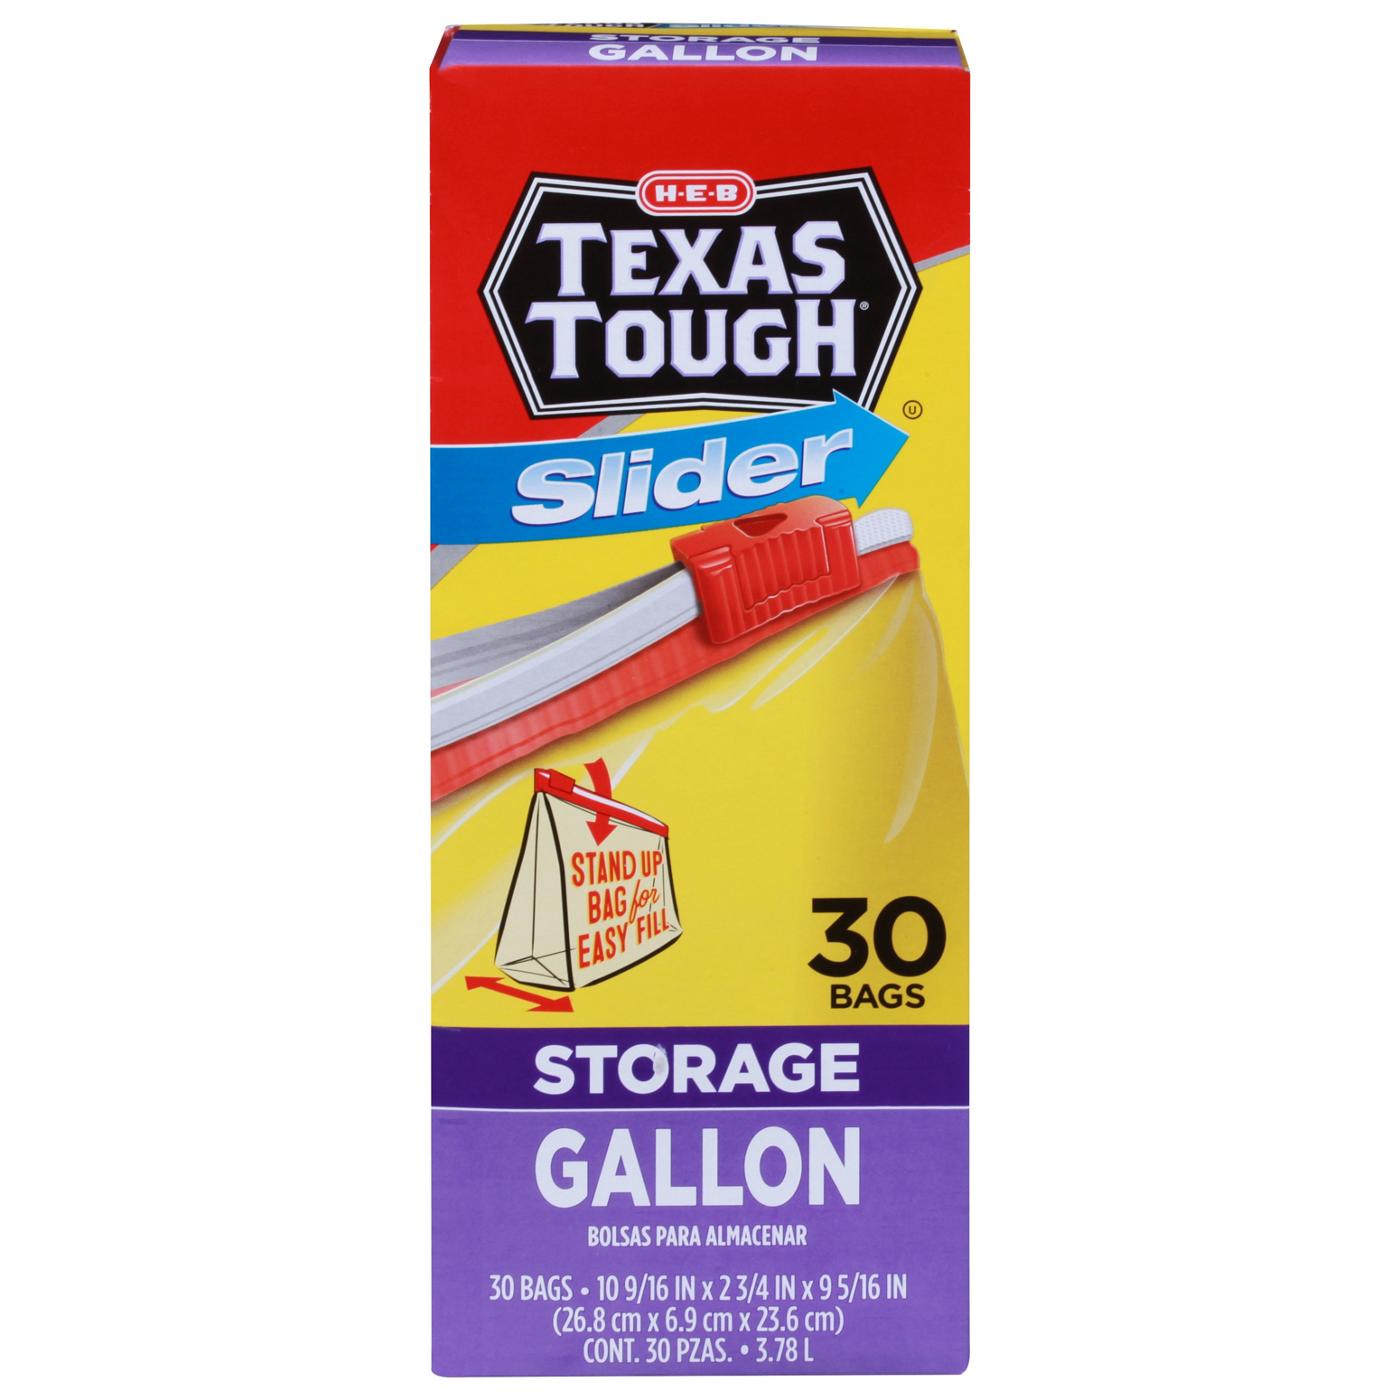 H-E-B Texas Tough Slider Gallon Storage Bags - Shop Storage Bags